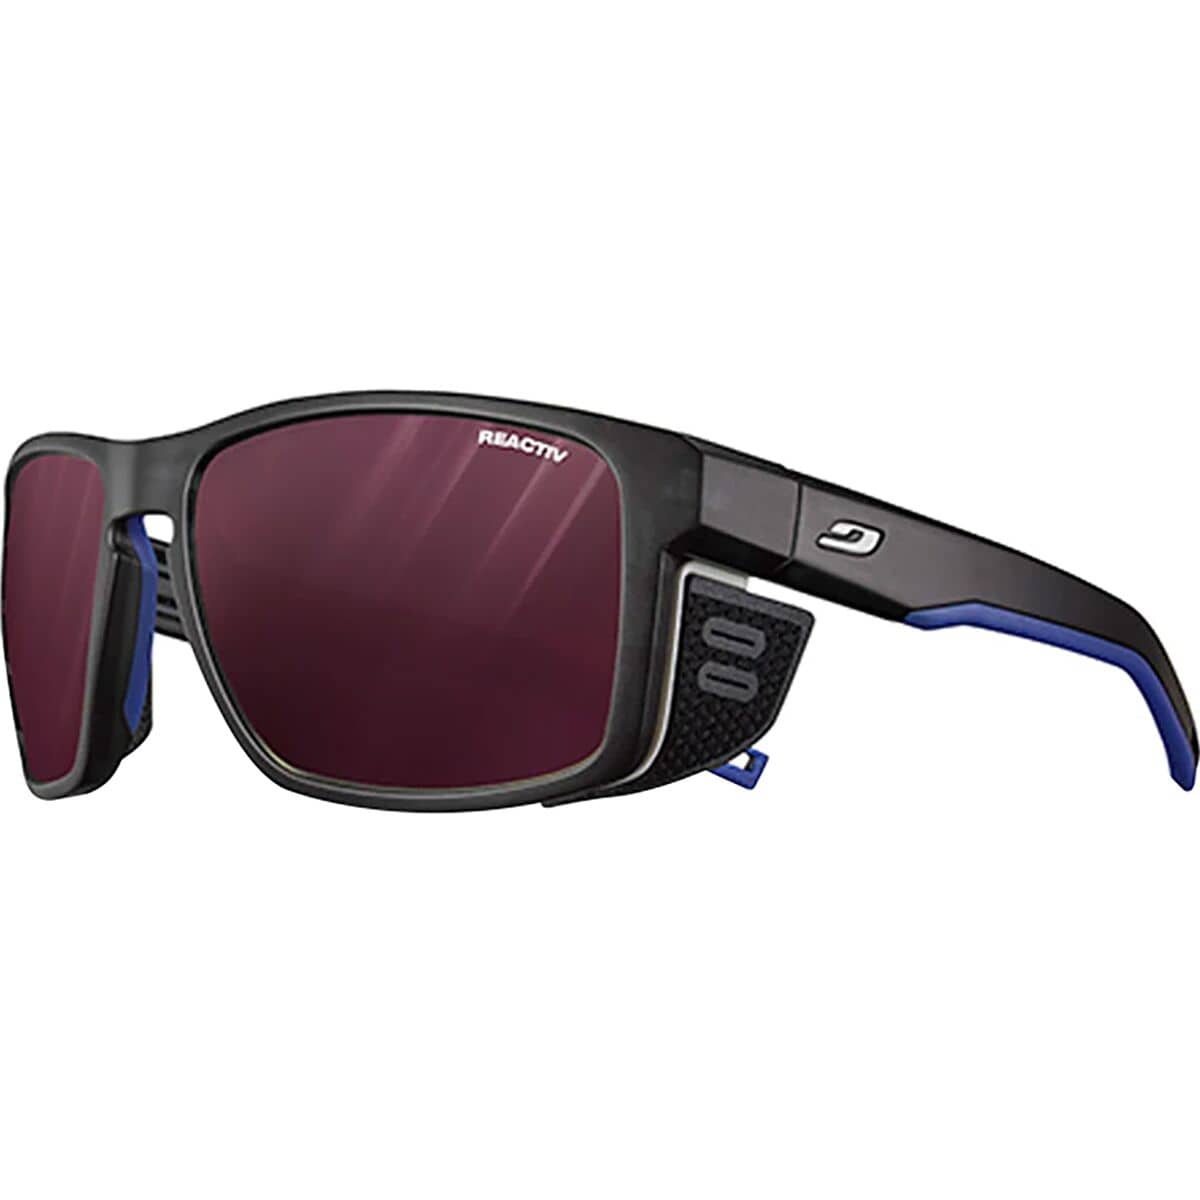 Julbo Shield Polarized Sunglasses Translucent Black/Blue/White, One Size - Men's